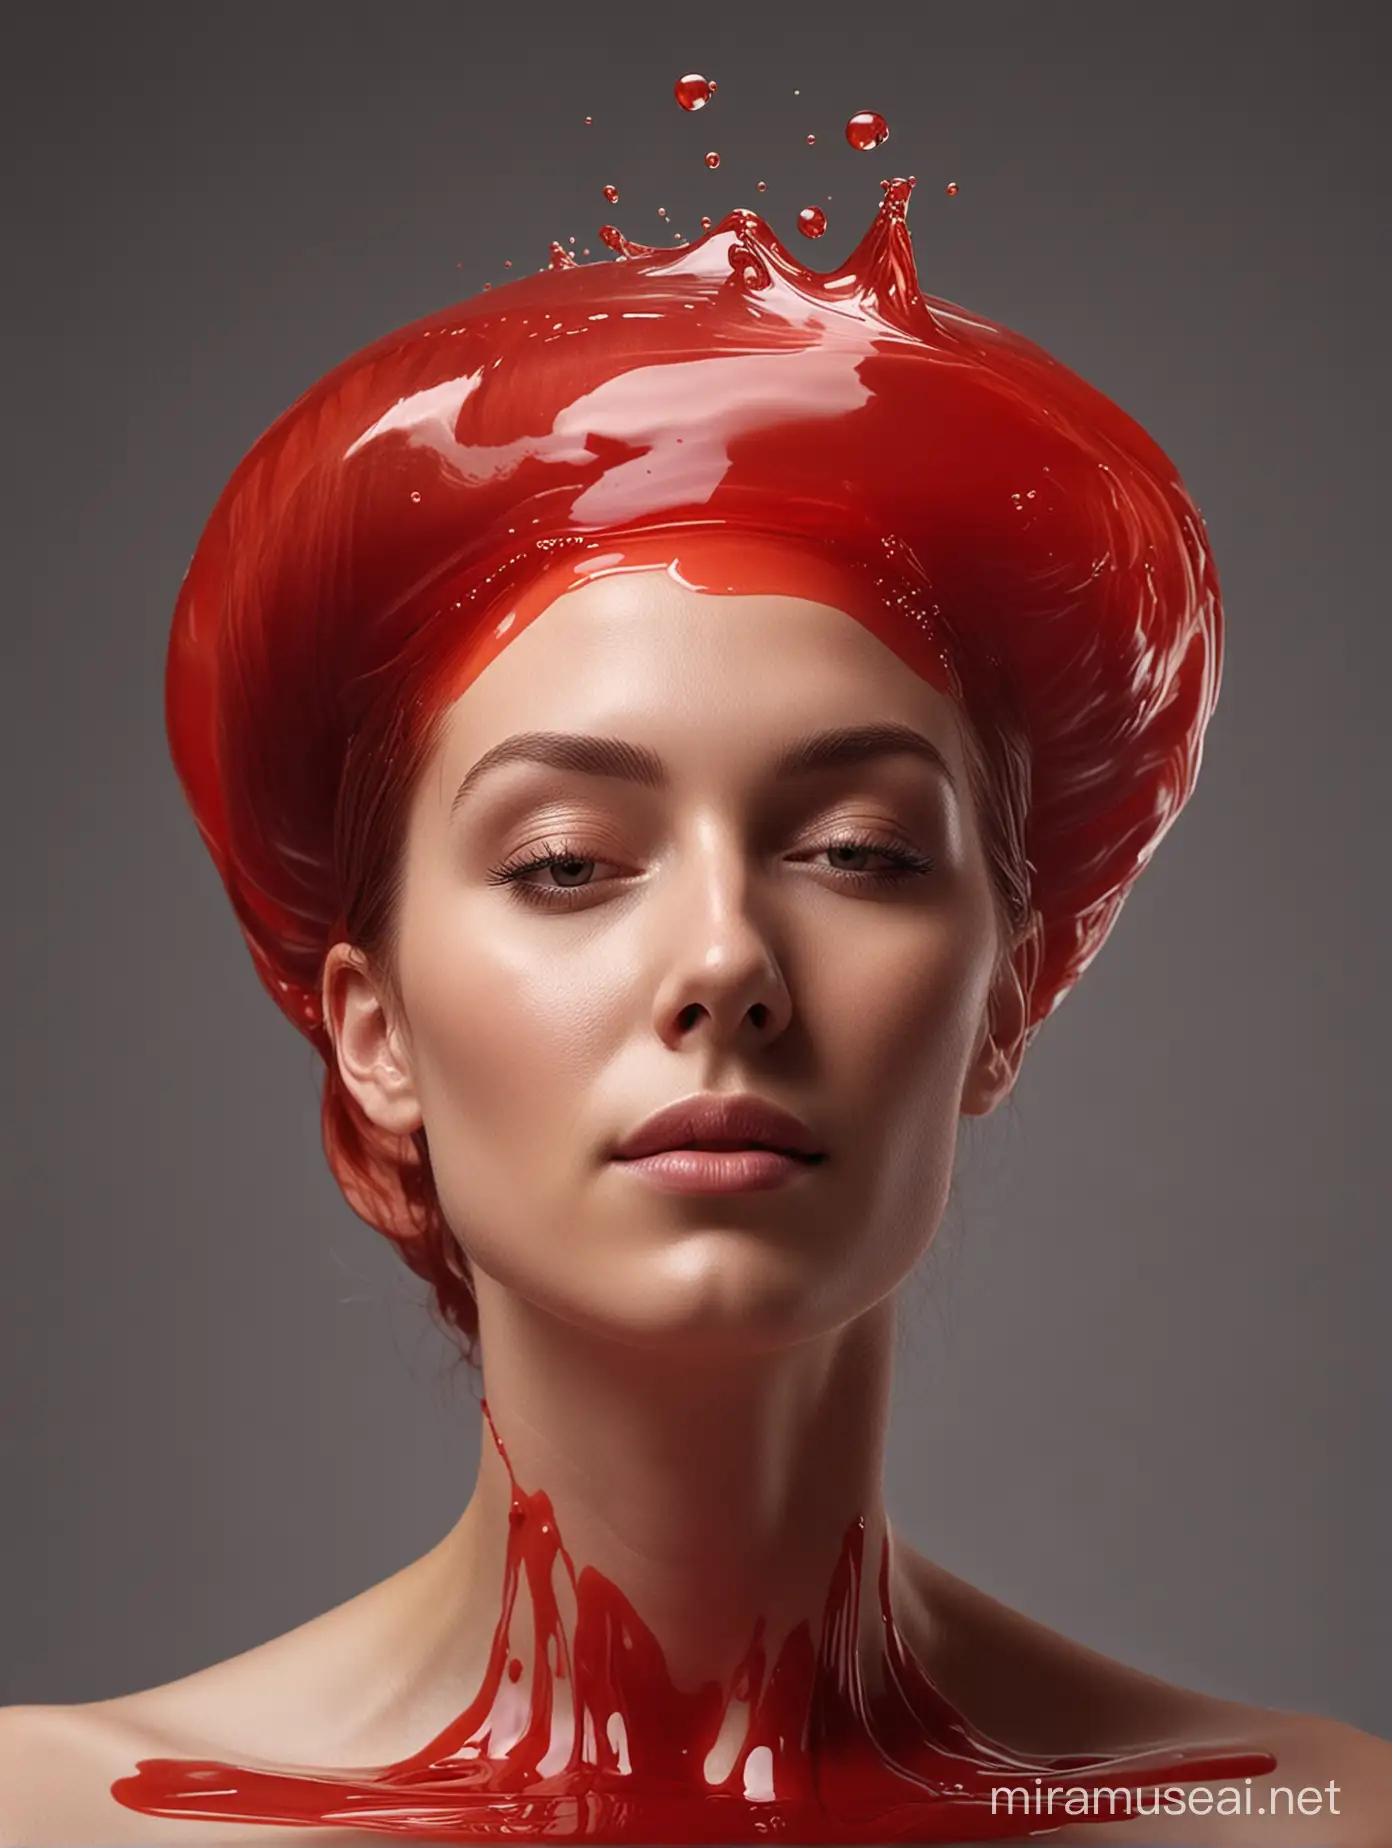 Red liquid creates floating Woman's head